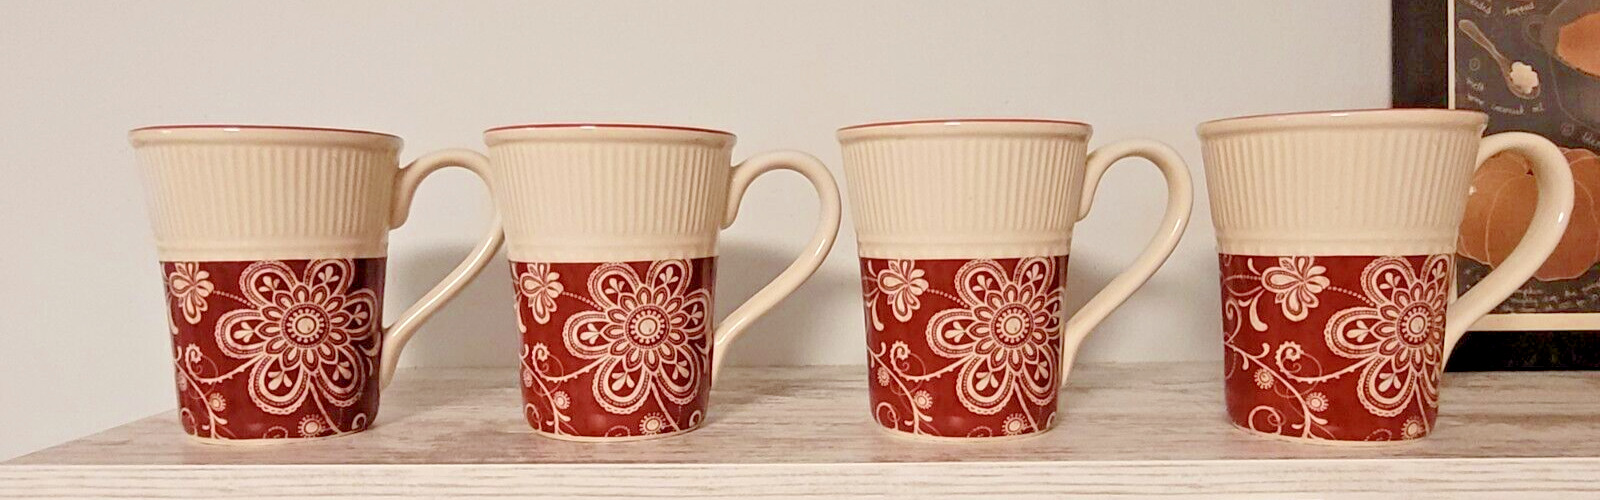 Pier 1 Imports Maribeth Floral Boho Print Ironstone Cups Mugs Set Of 4